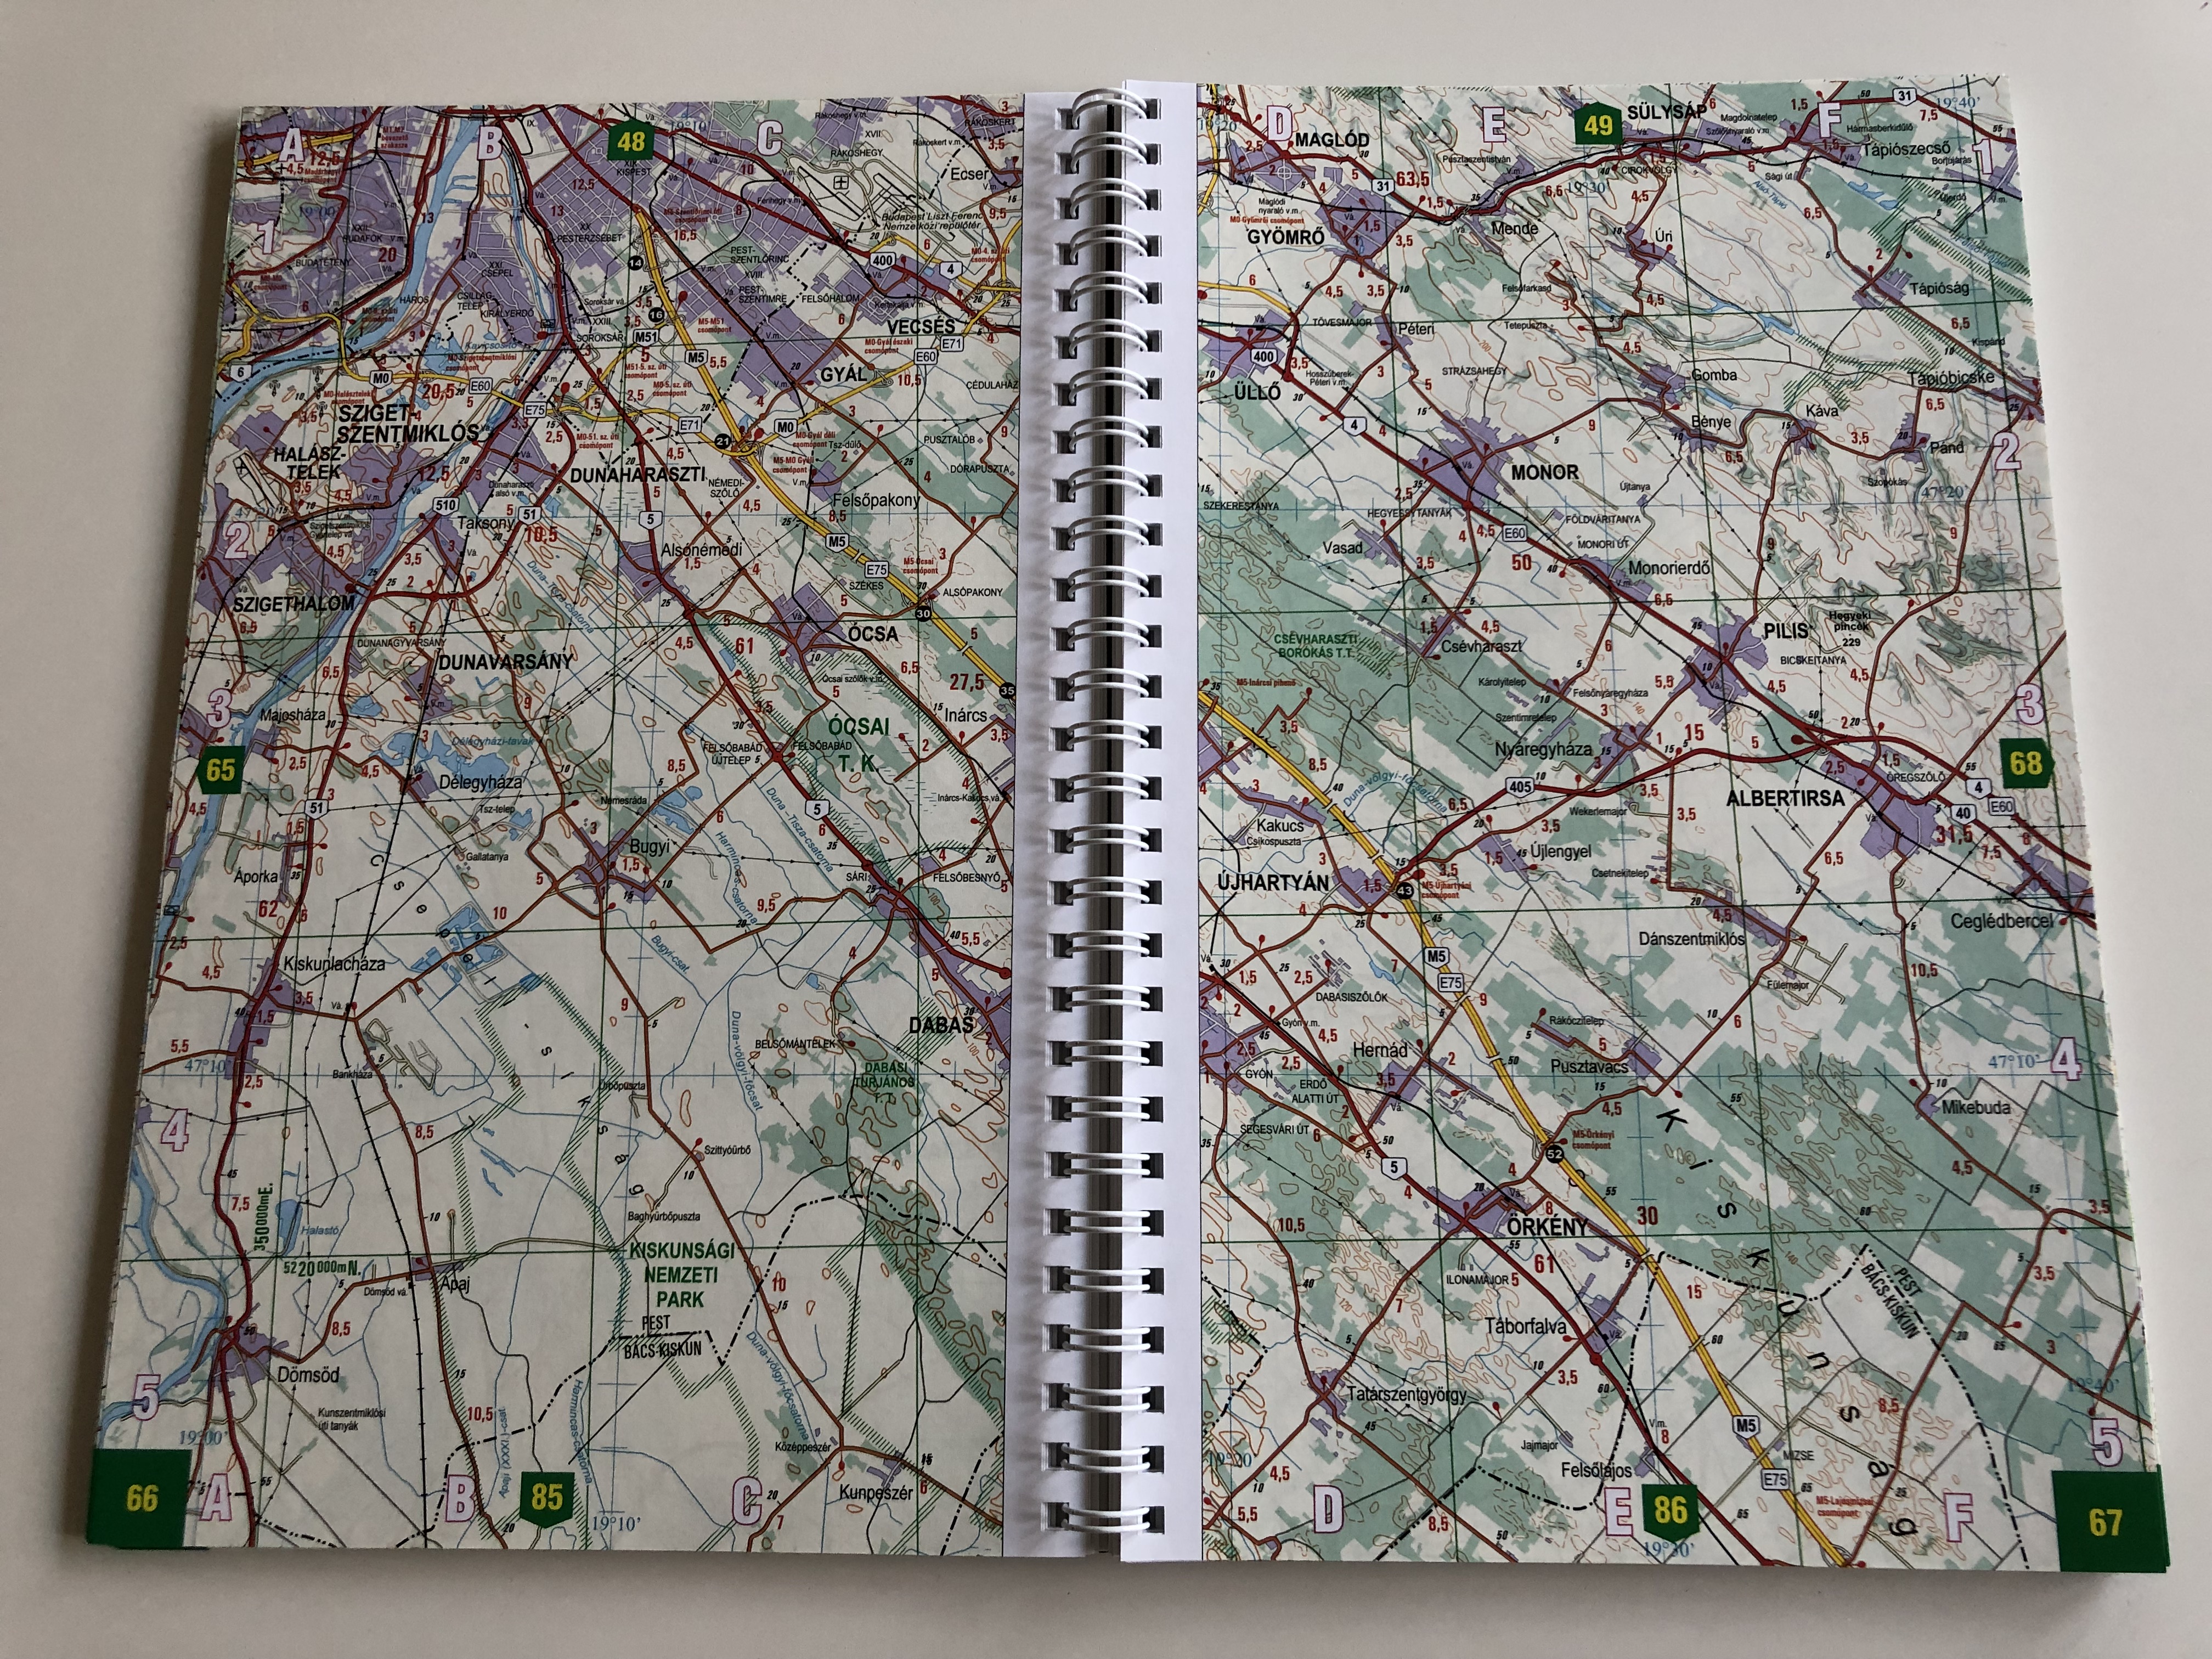 hungary-road-atlas-magyarorsz-g-aut-atlasz-ungarn-autoatlas-topomap-english-german-hungarian-road-atlas-of-hungary-1-200.000-16-.jpg